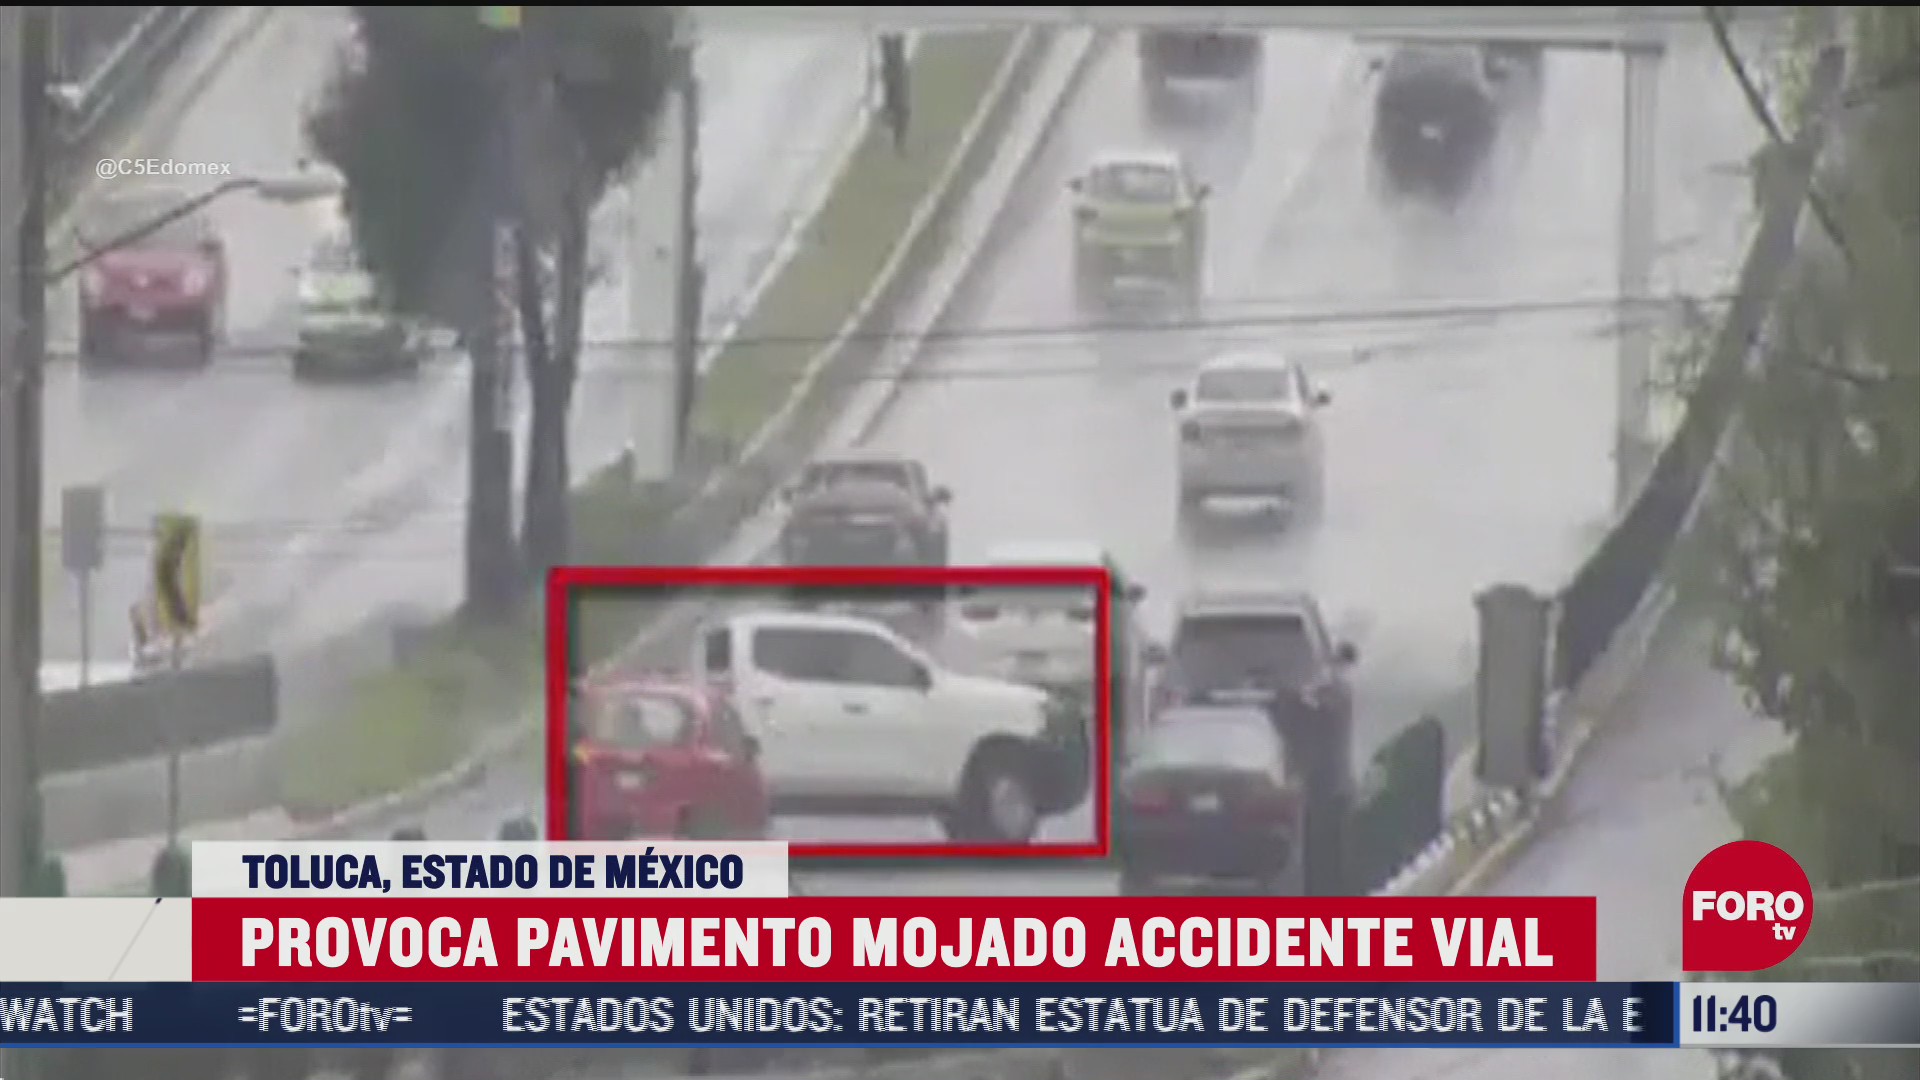 lluvia provoca accidente vial en toluca estado de mexico